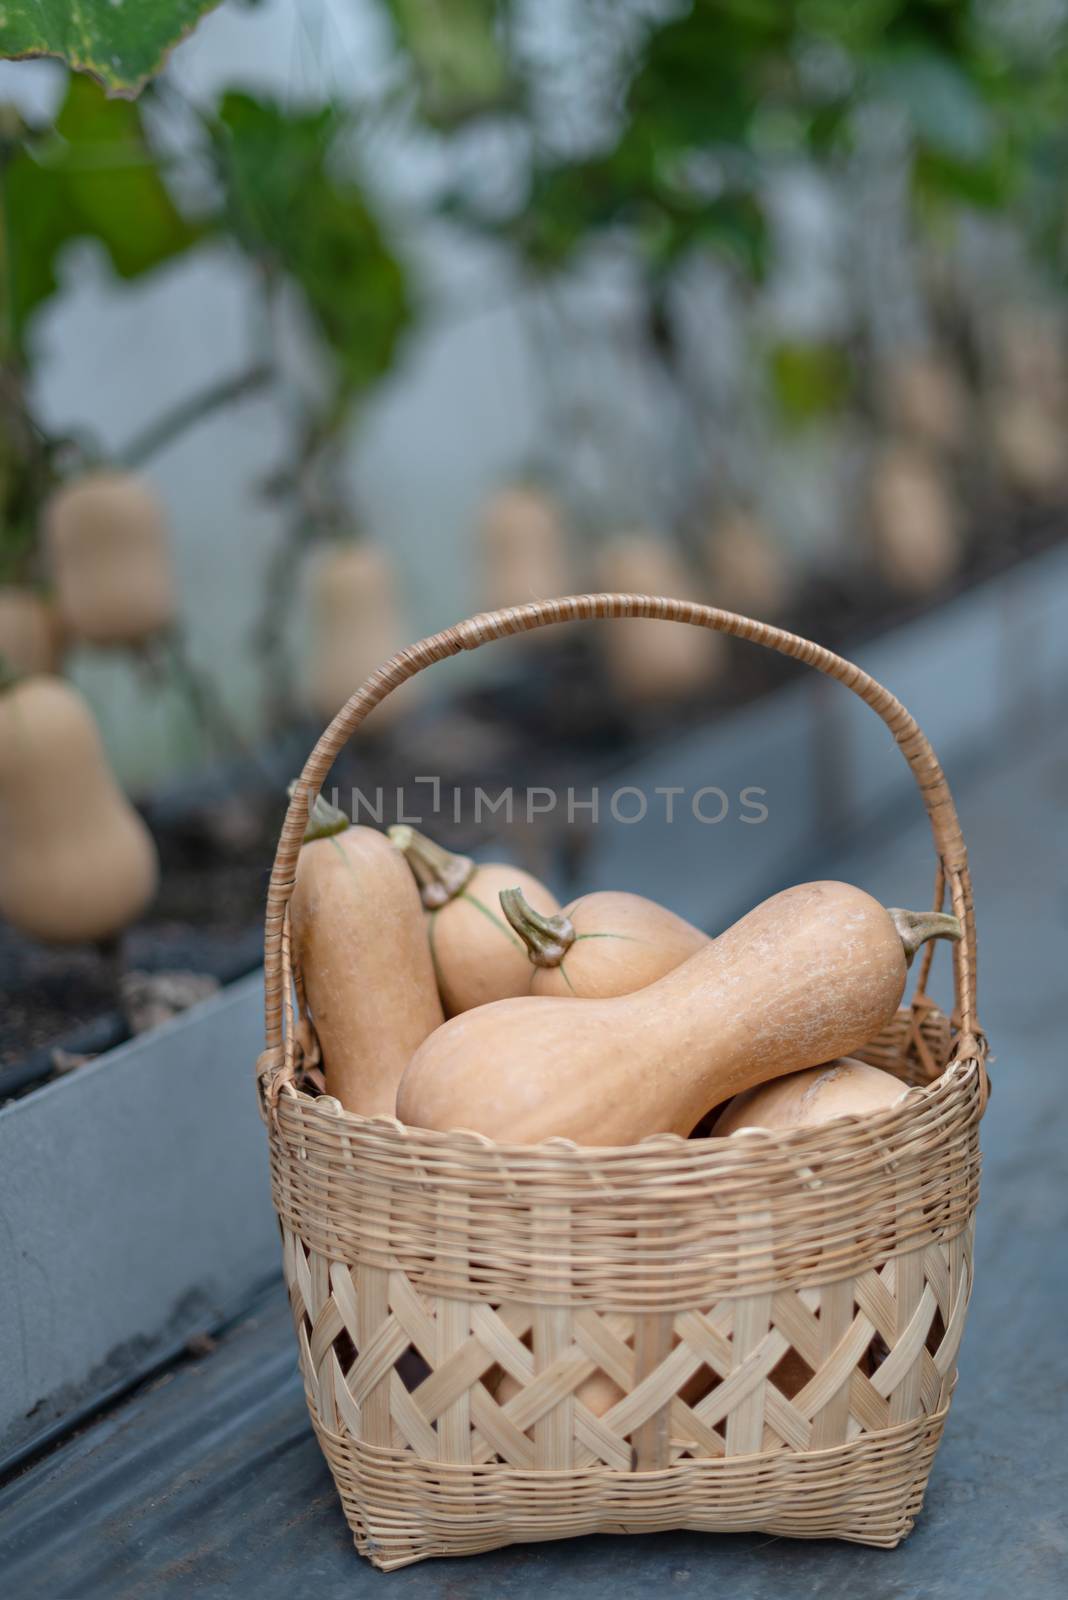 butternut squash in bamboo basket by rakratchada